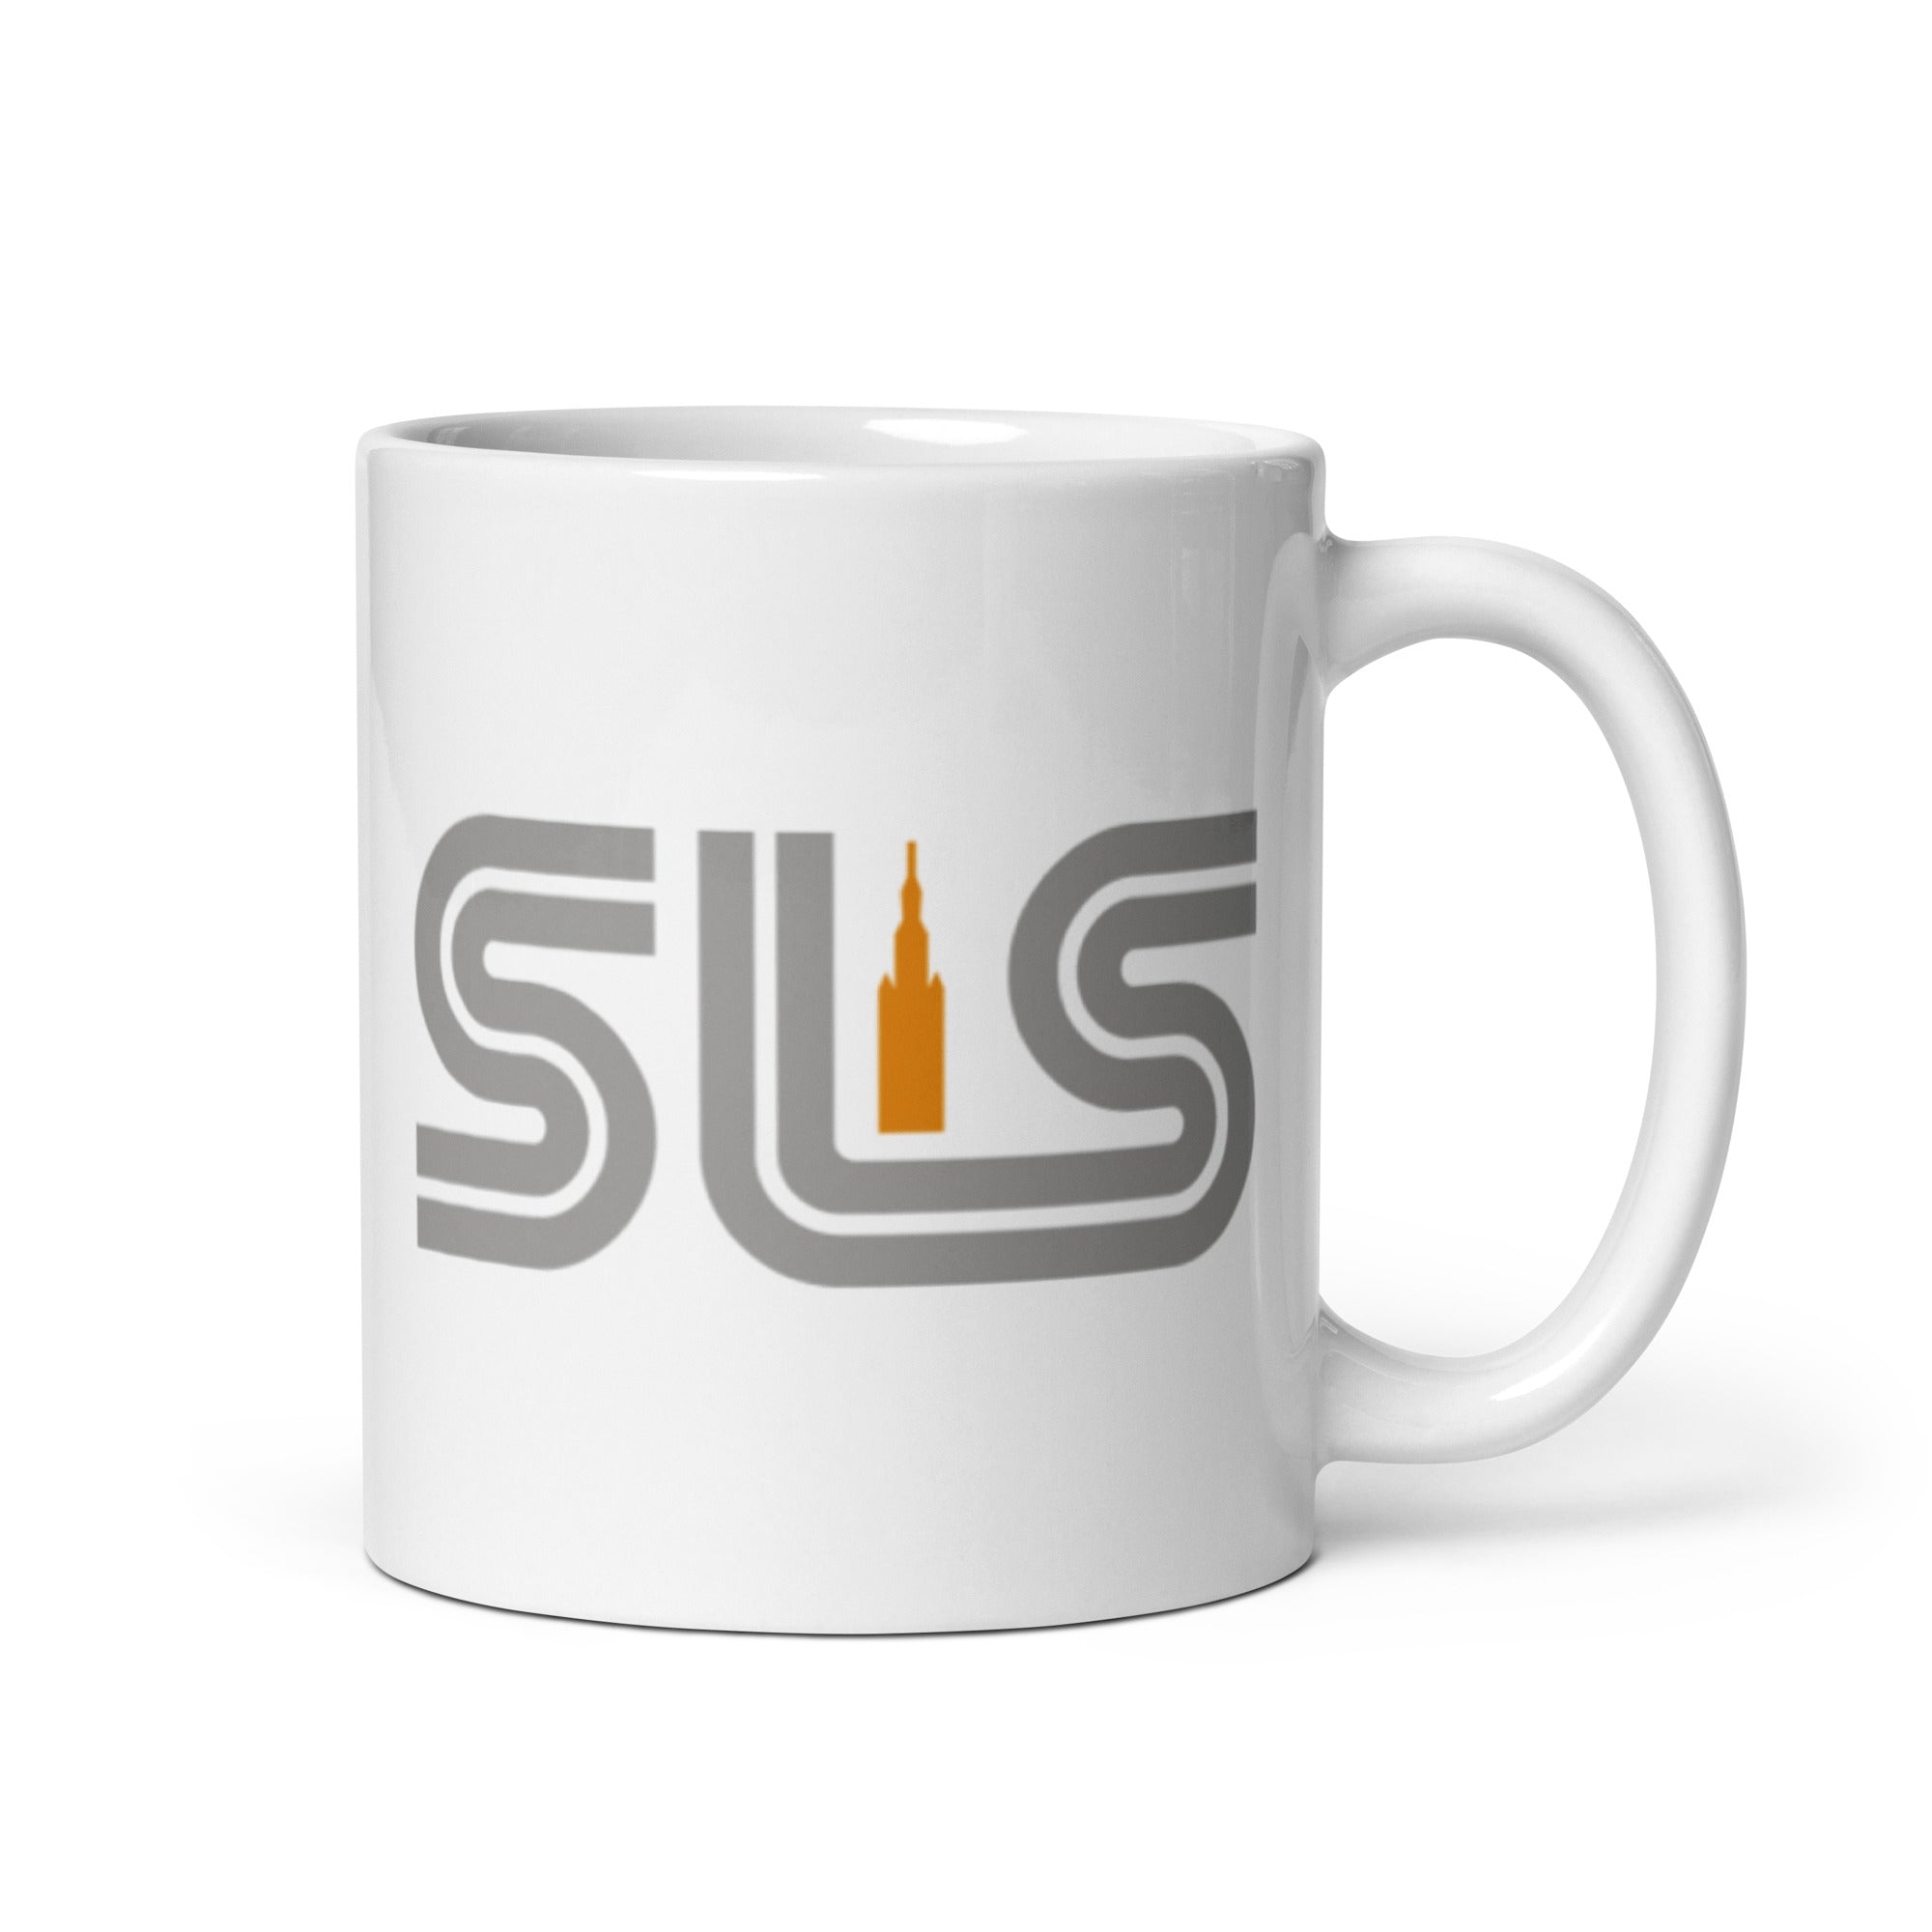 SLS - White Mug